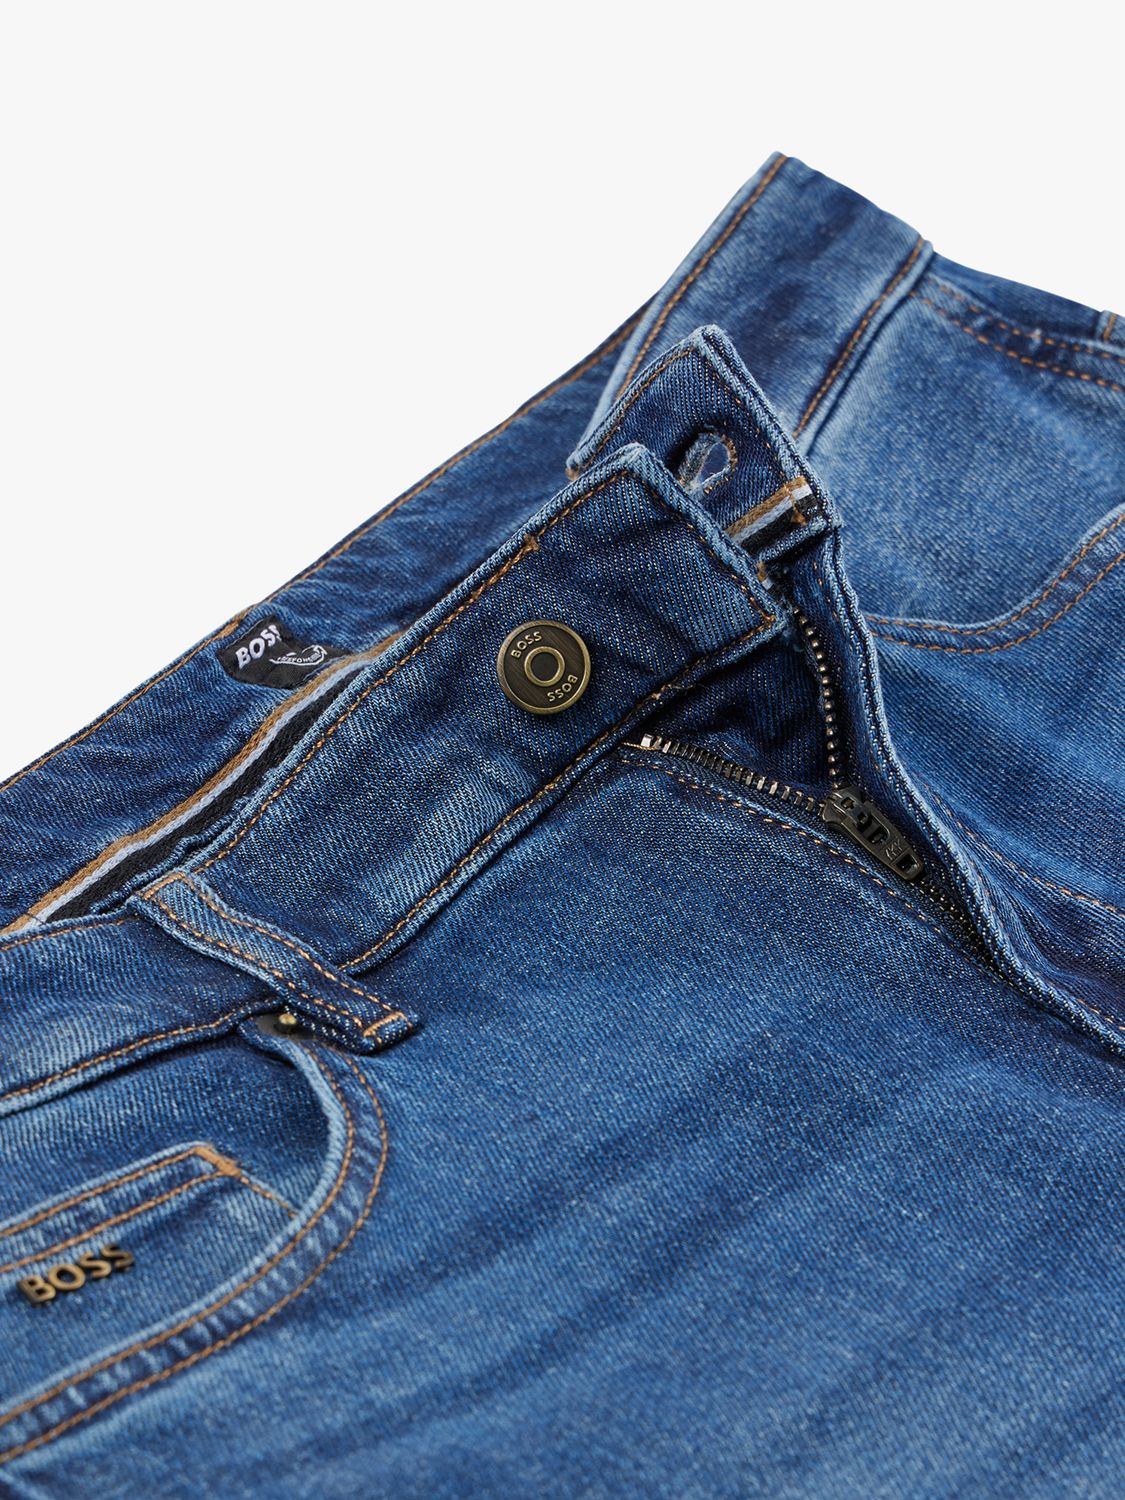 HUGO BOSS Delaware Slim Fit Jeans, Navy at John Lewis & Partners